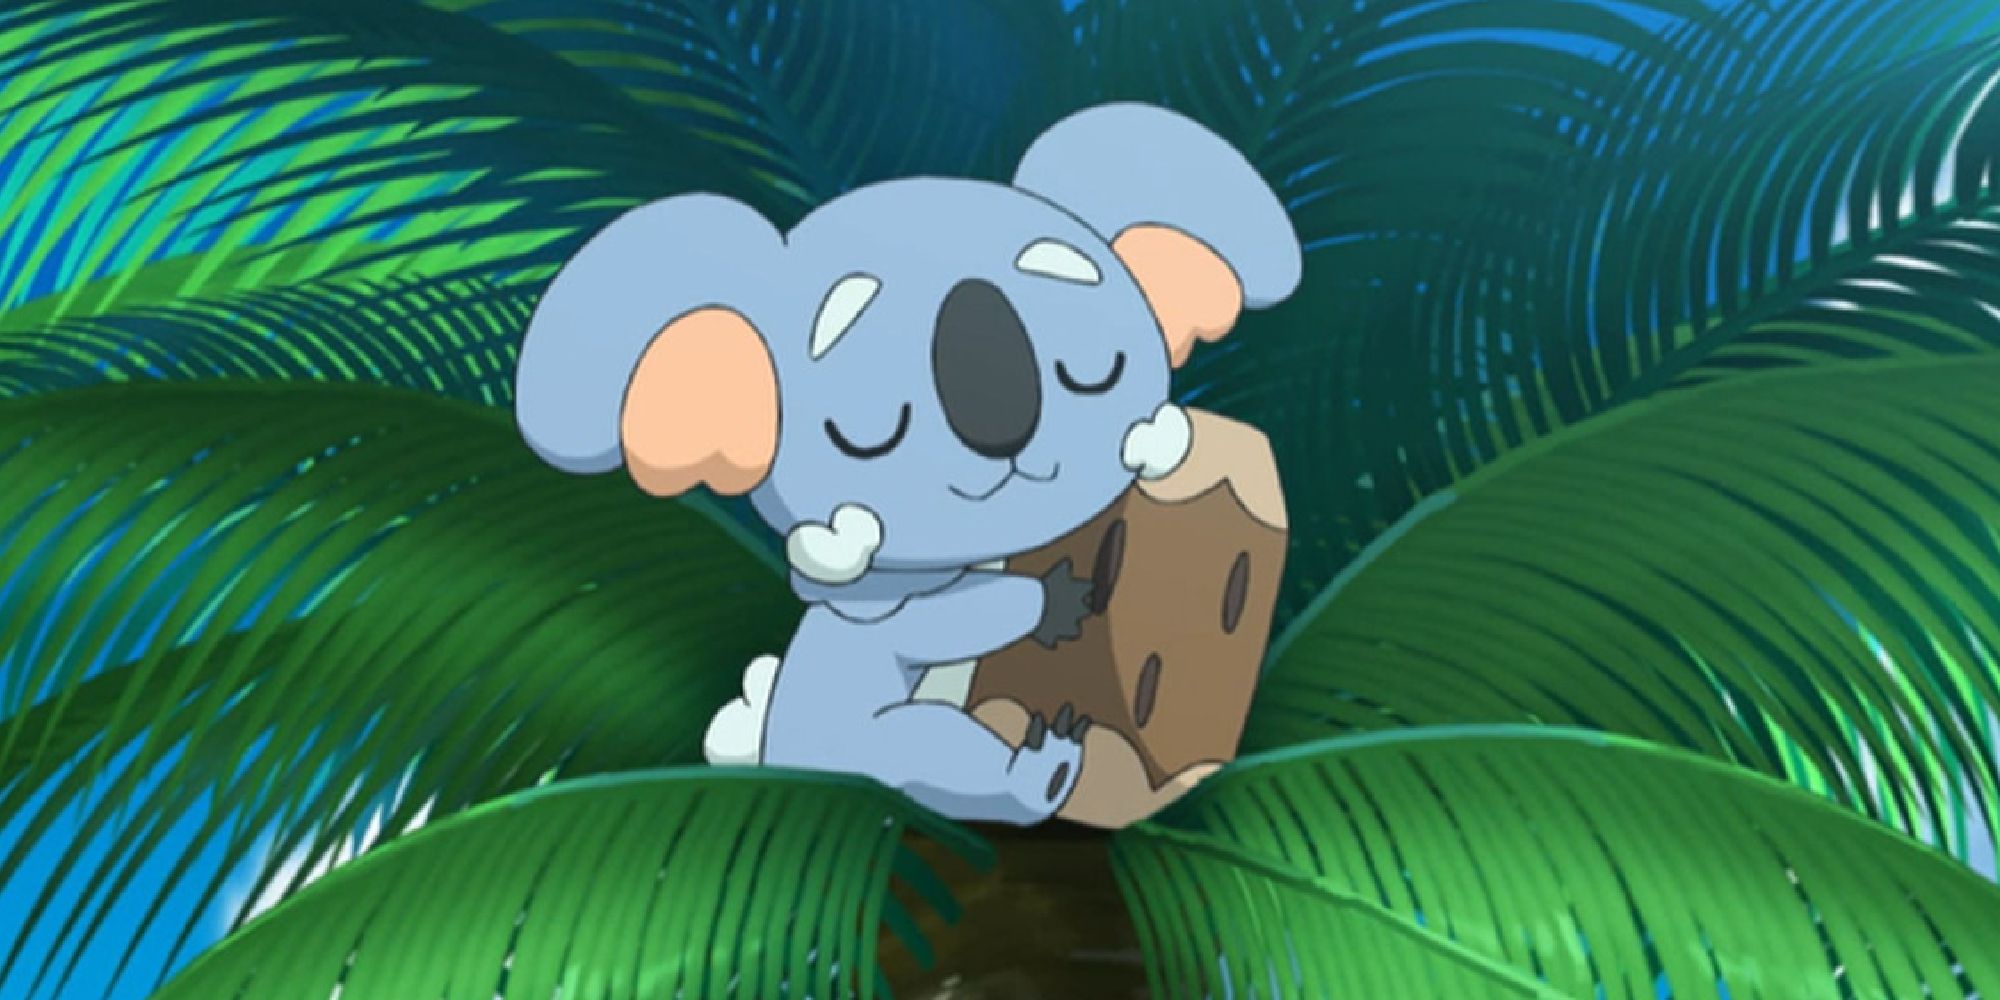 Komala appearing in the Pokemon anime, sitting in a tree sleeping